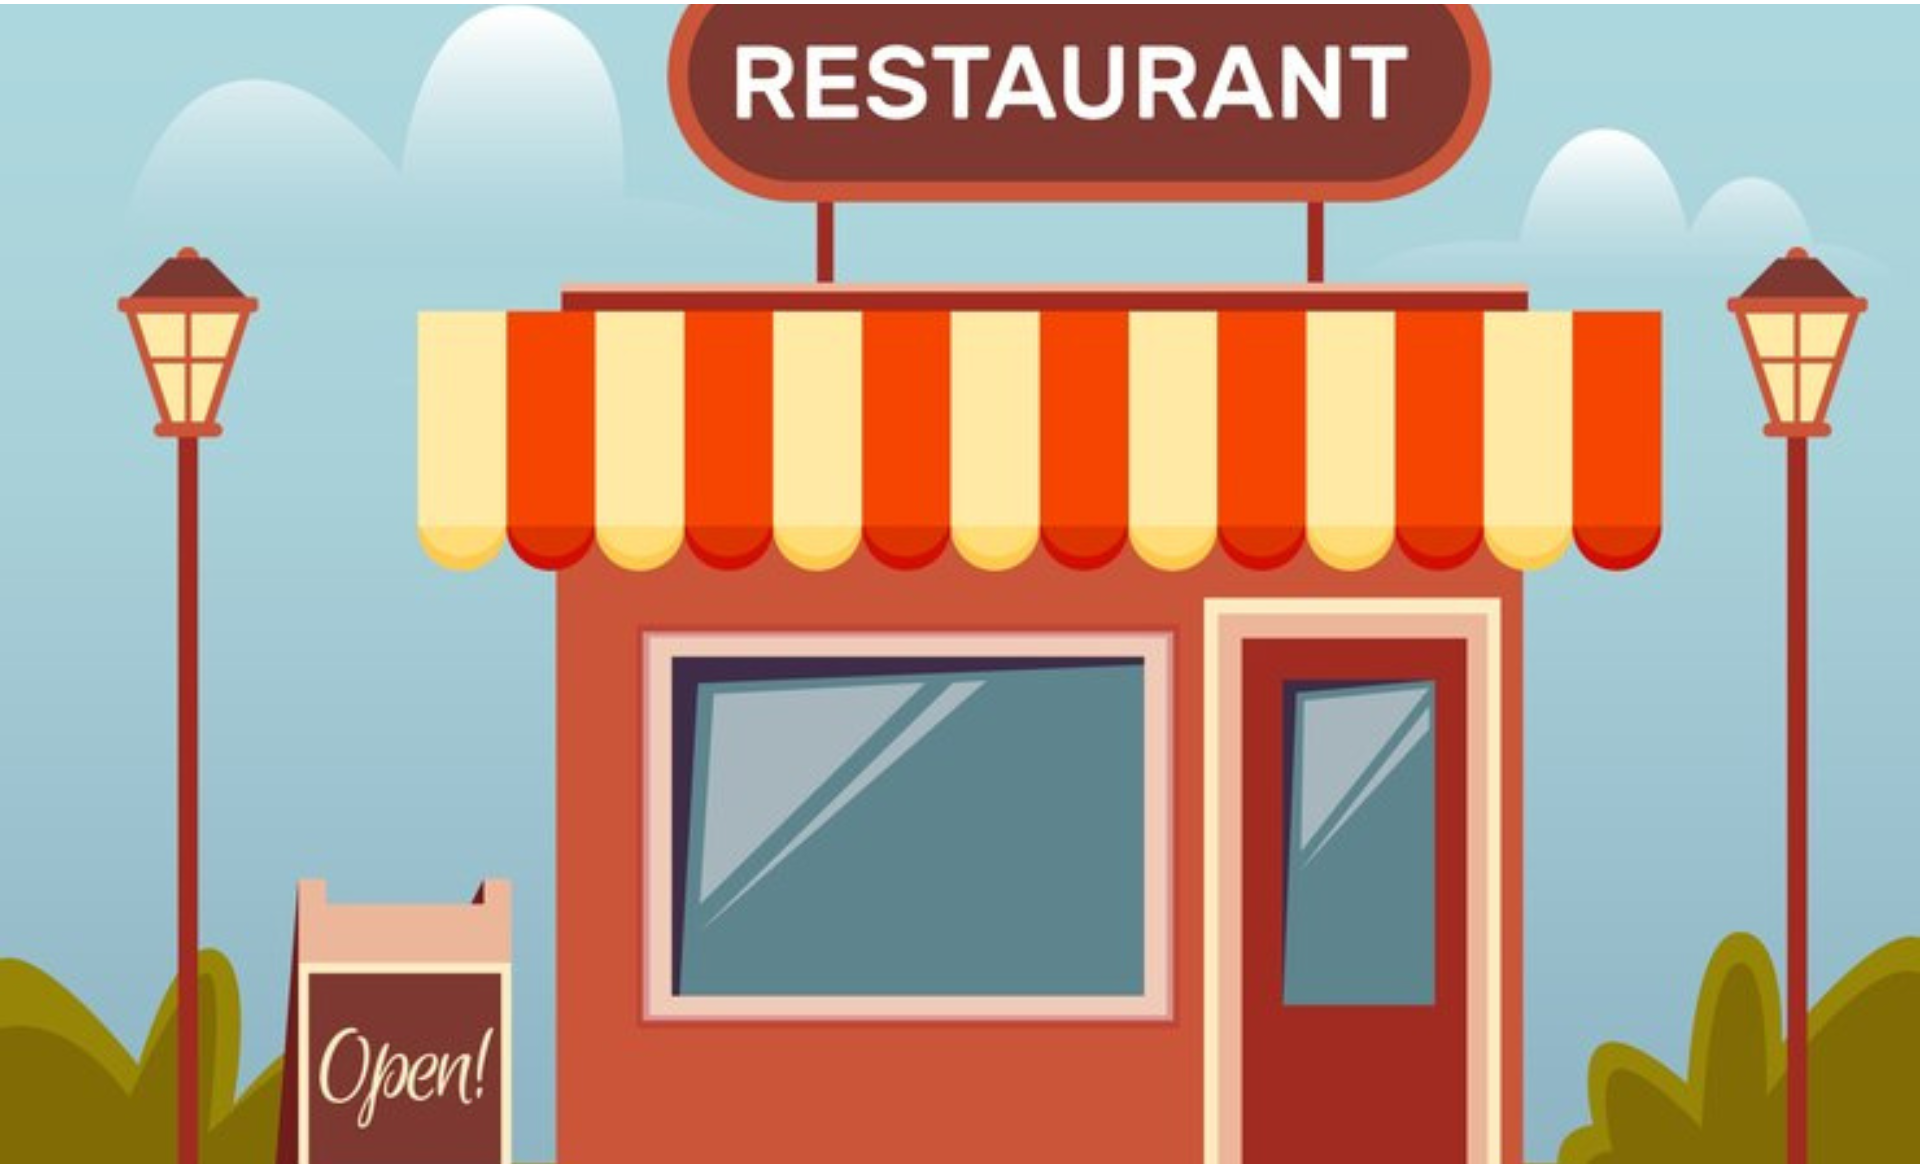 Digital marketing services for restaurant